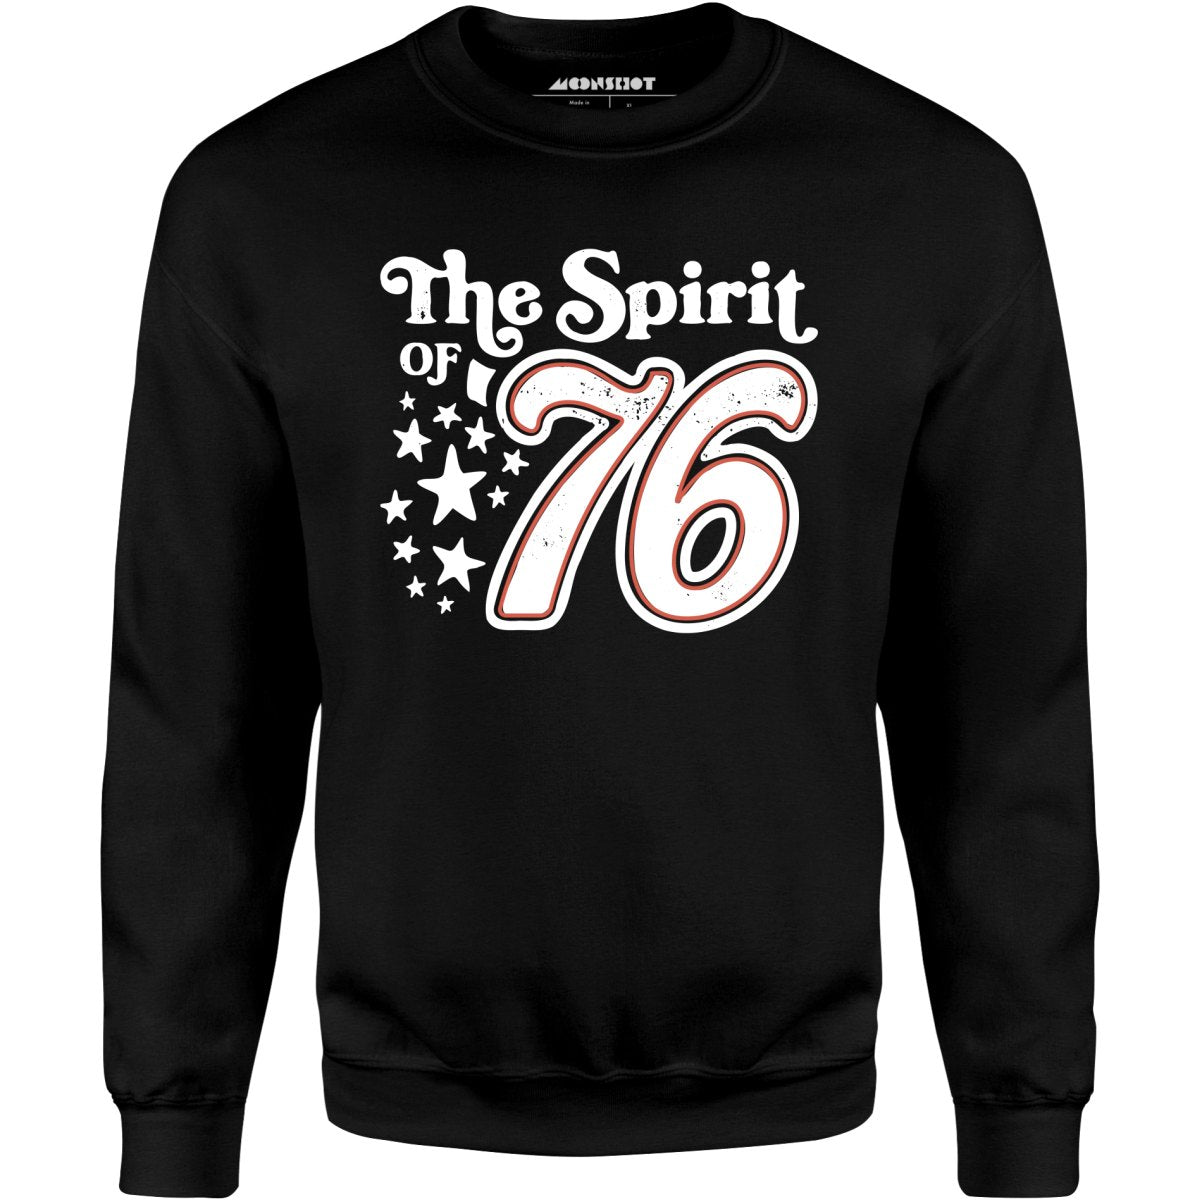 The Spirit of '76 - Unisex Sweatshirt